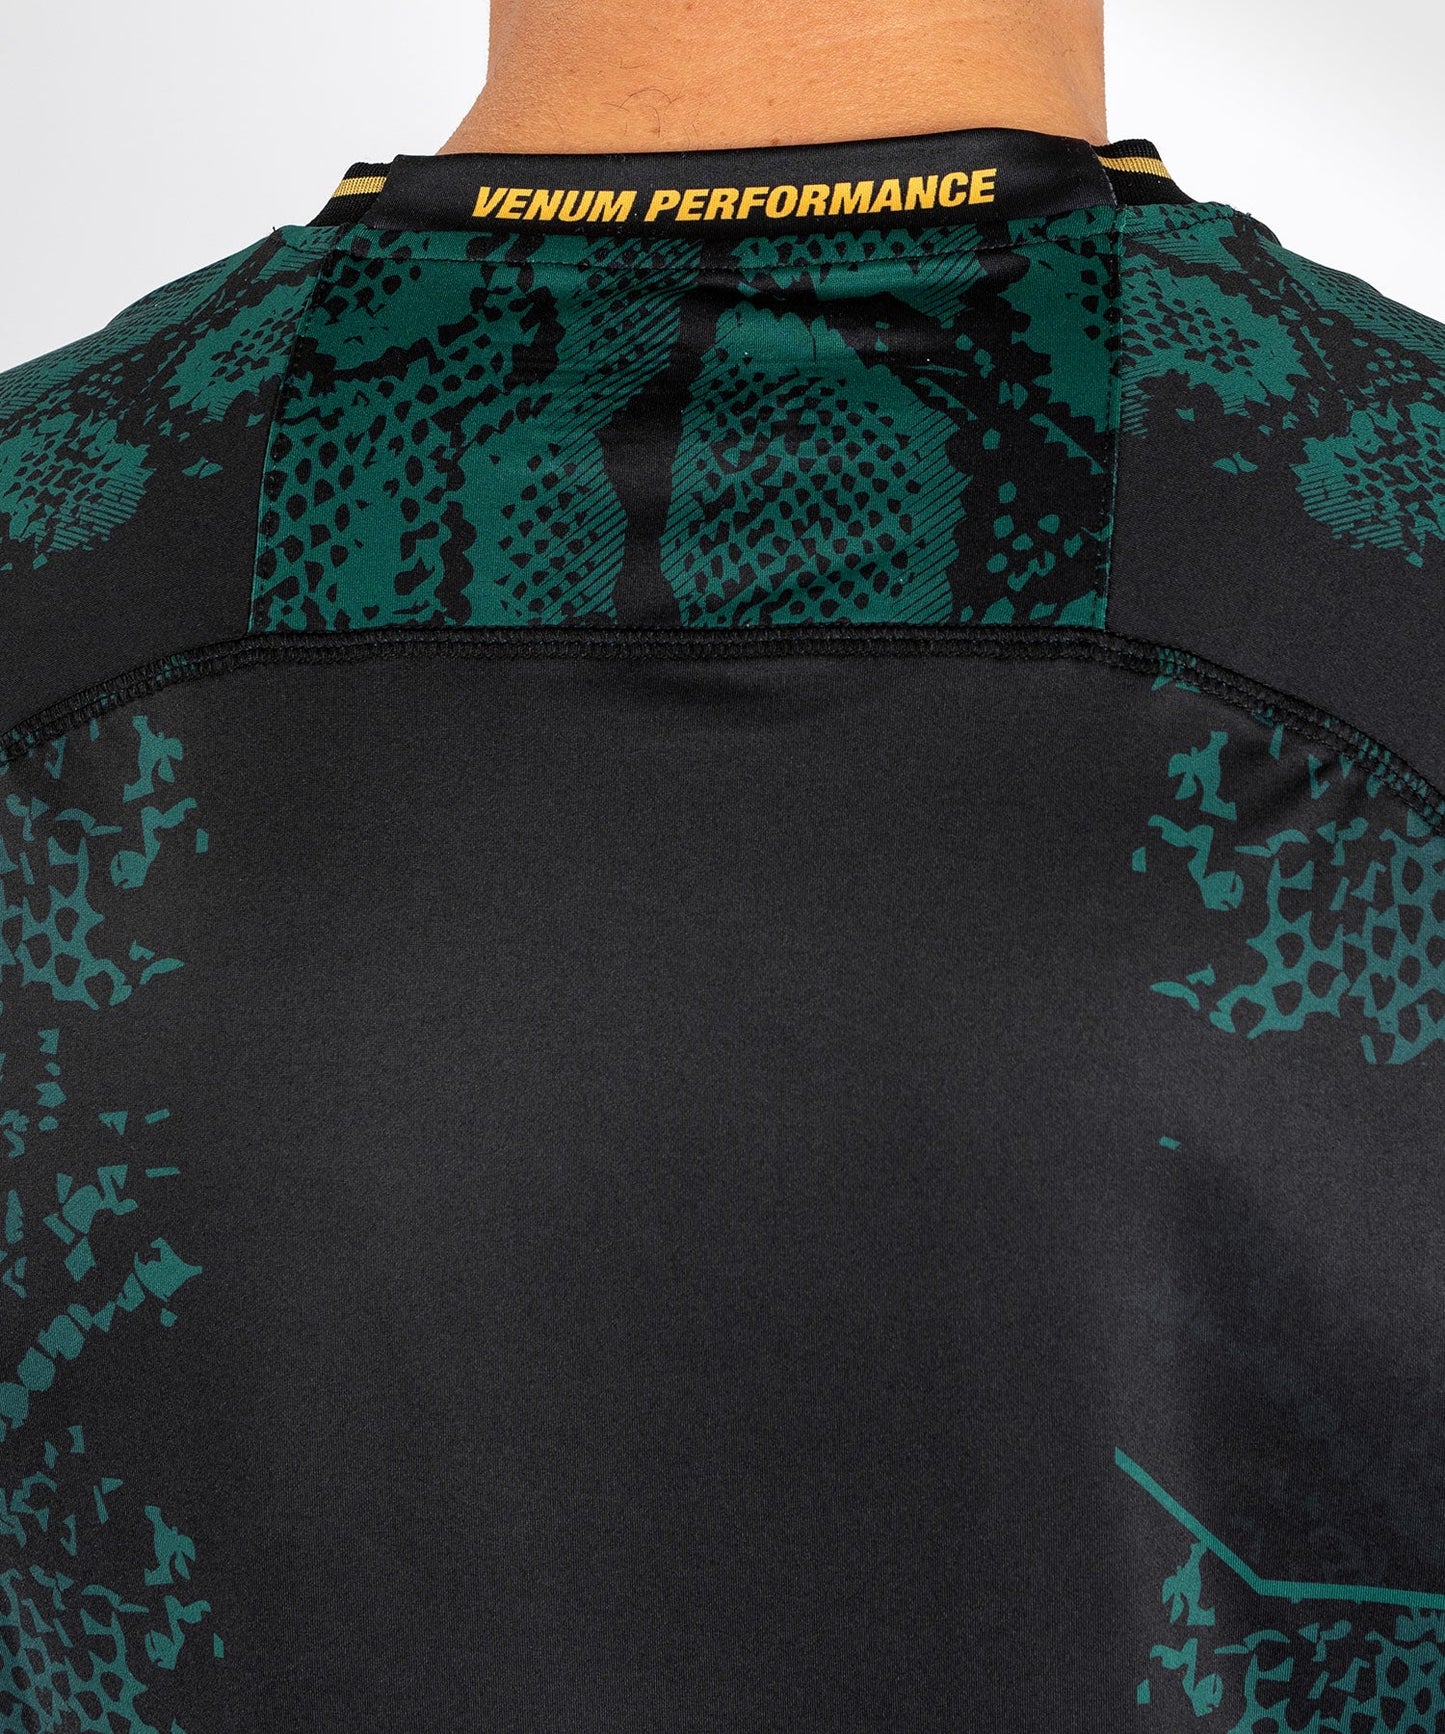 UFC Adrenaline by Venum Personalized Authentic Fight Night Camiseta de hombre - Emerald Edition - Verde/Negro/Oro